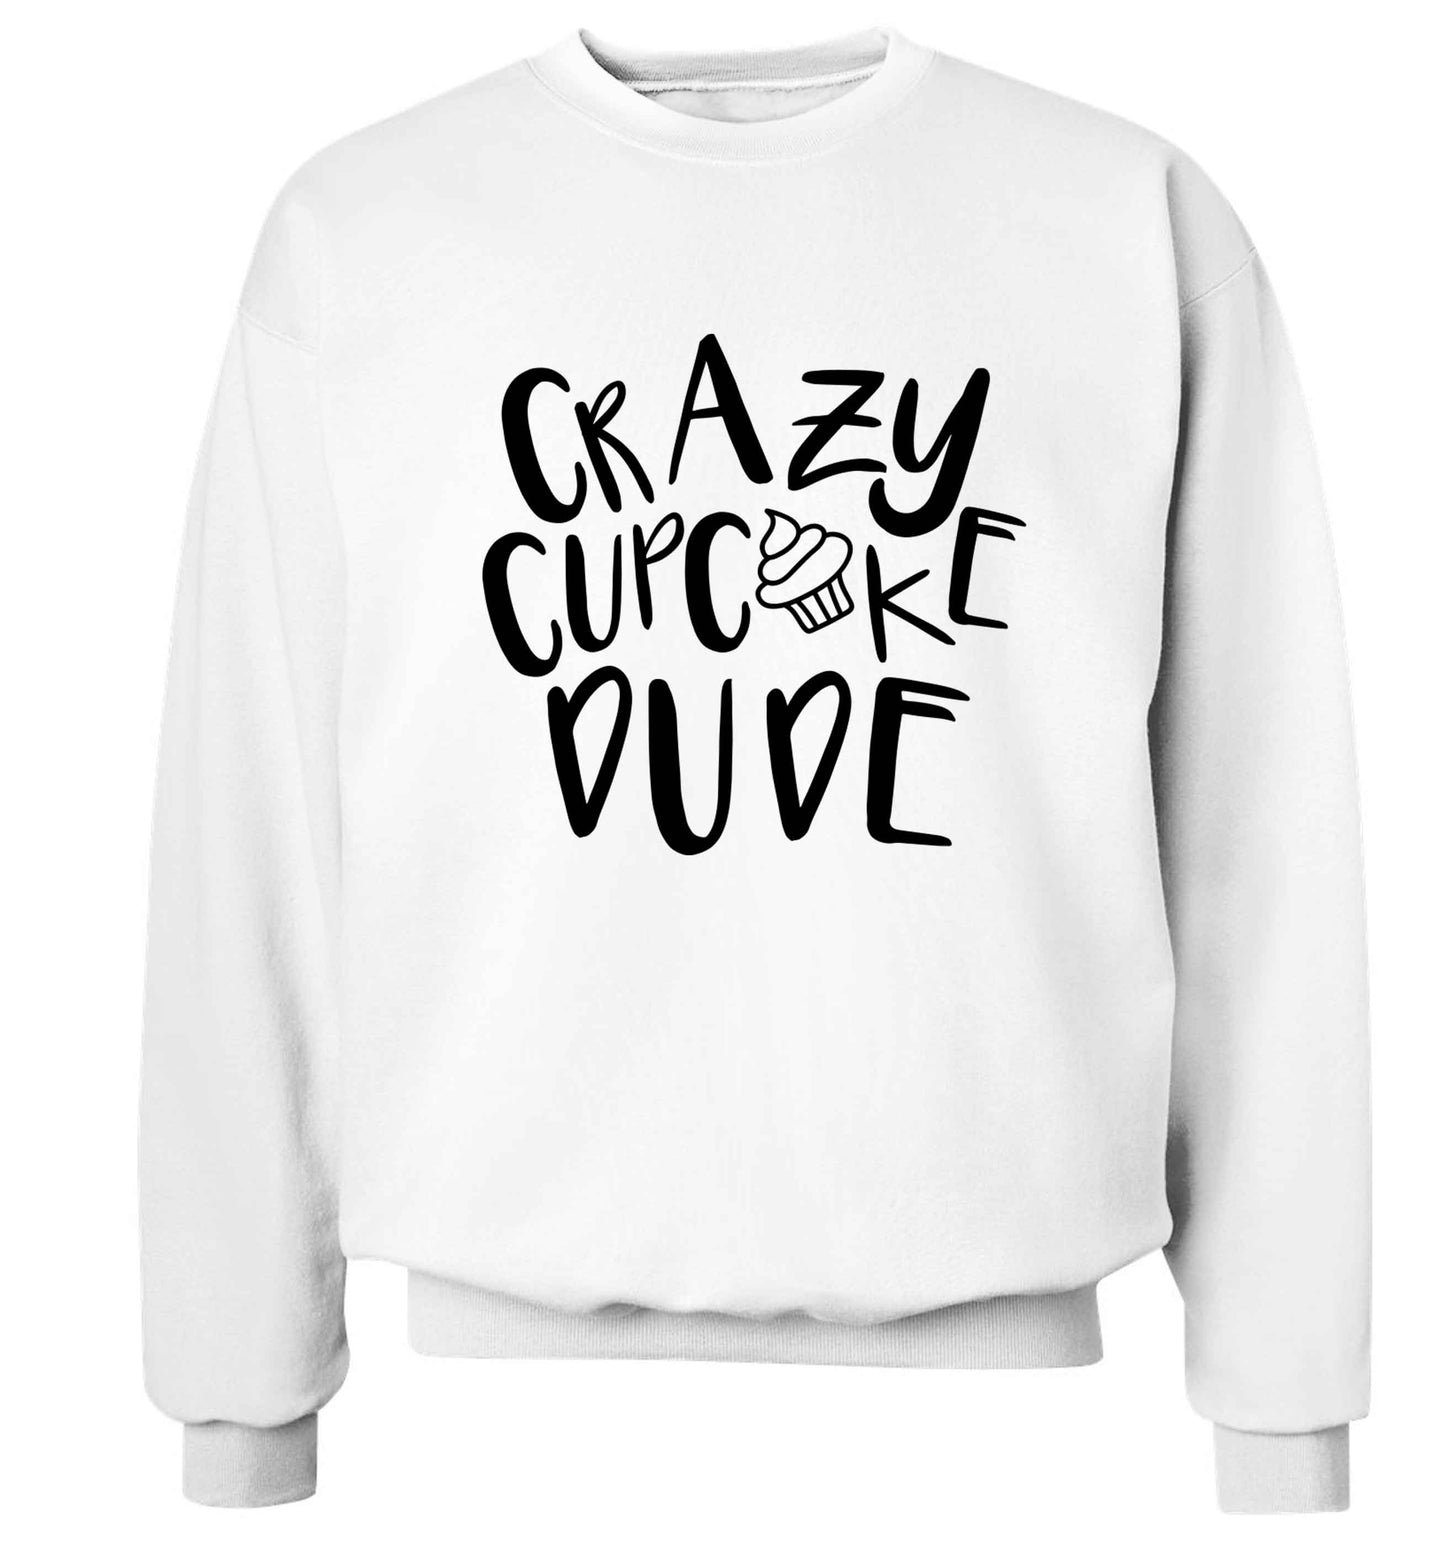 Crazy cupcake dude Adult's unisex white Sweater 2XL